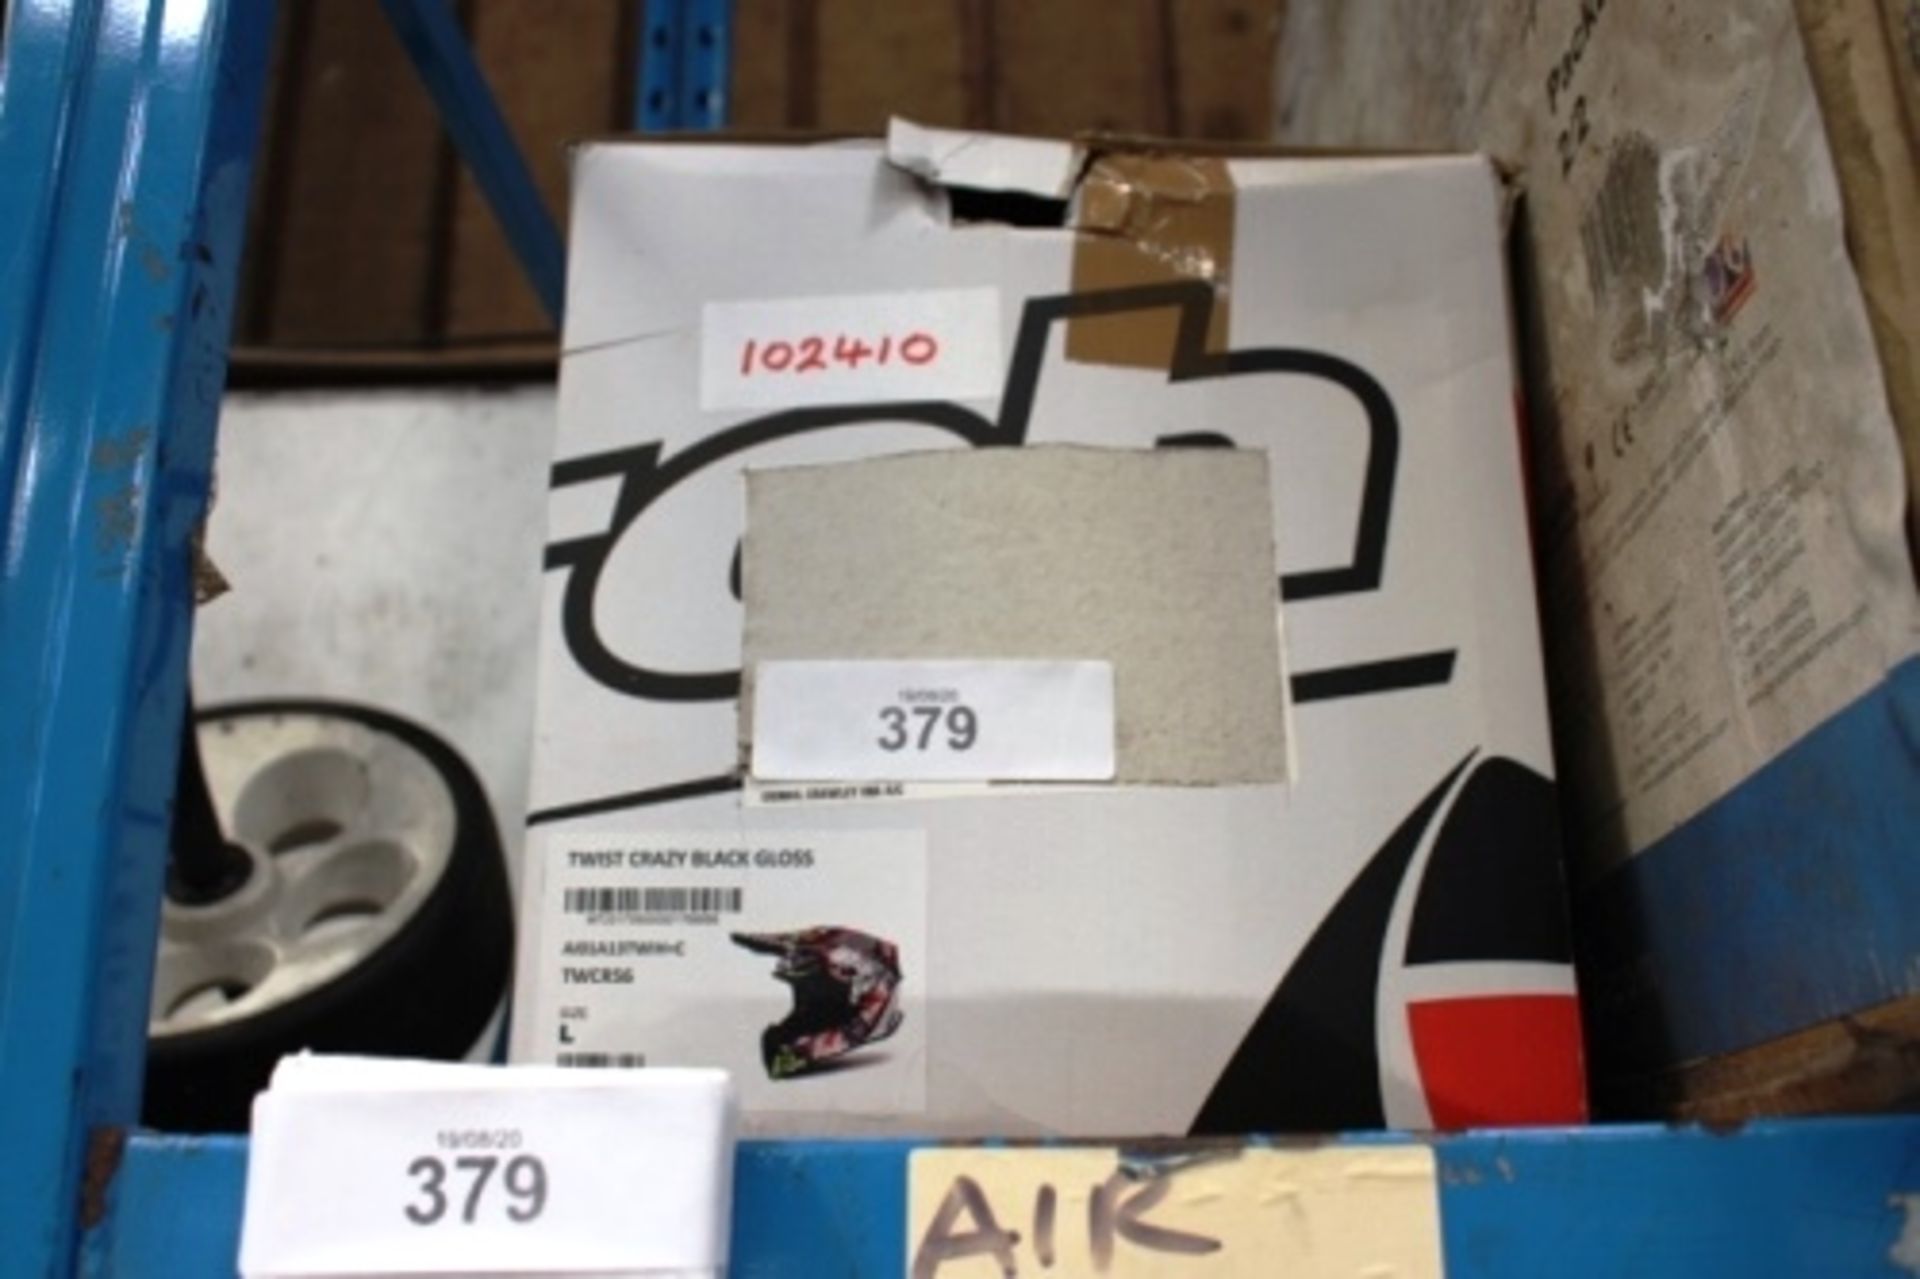 1 x Airoh twist crazy black gloss TWCR56 helmet, size L code AIOA13RWIHZC - New in box (GS4) - Image 4 of 4